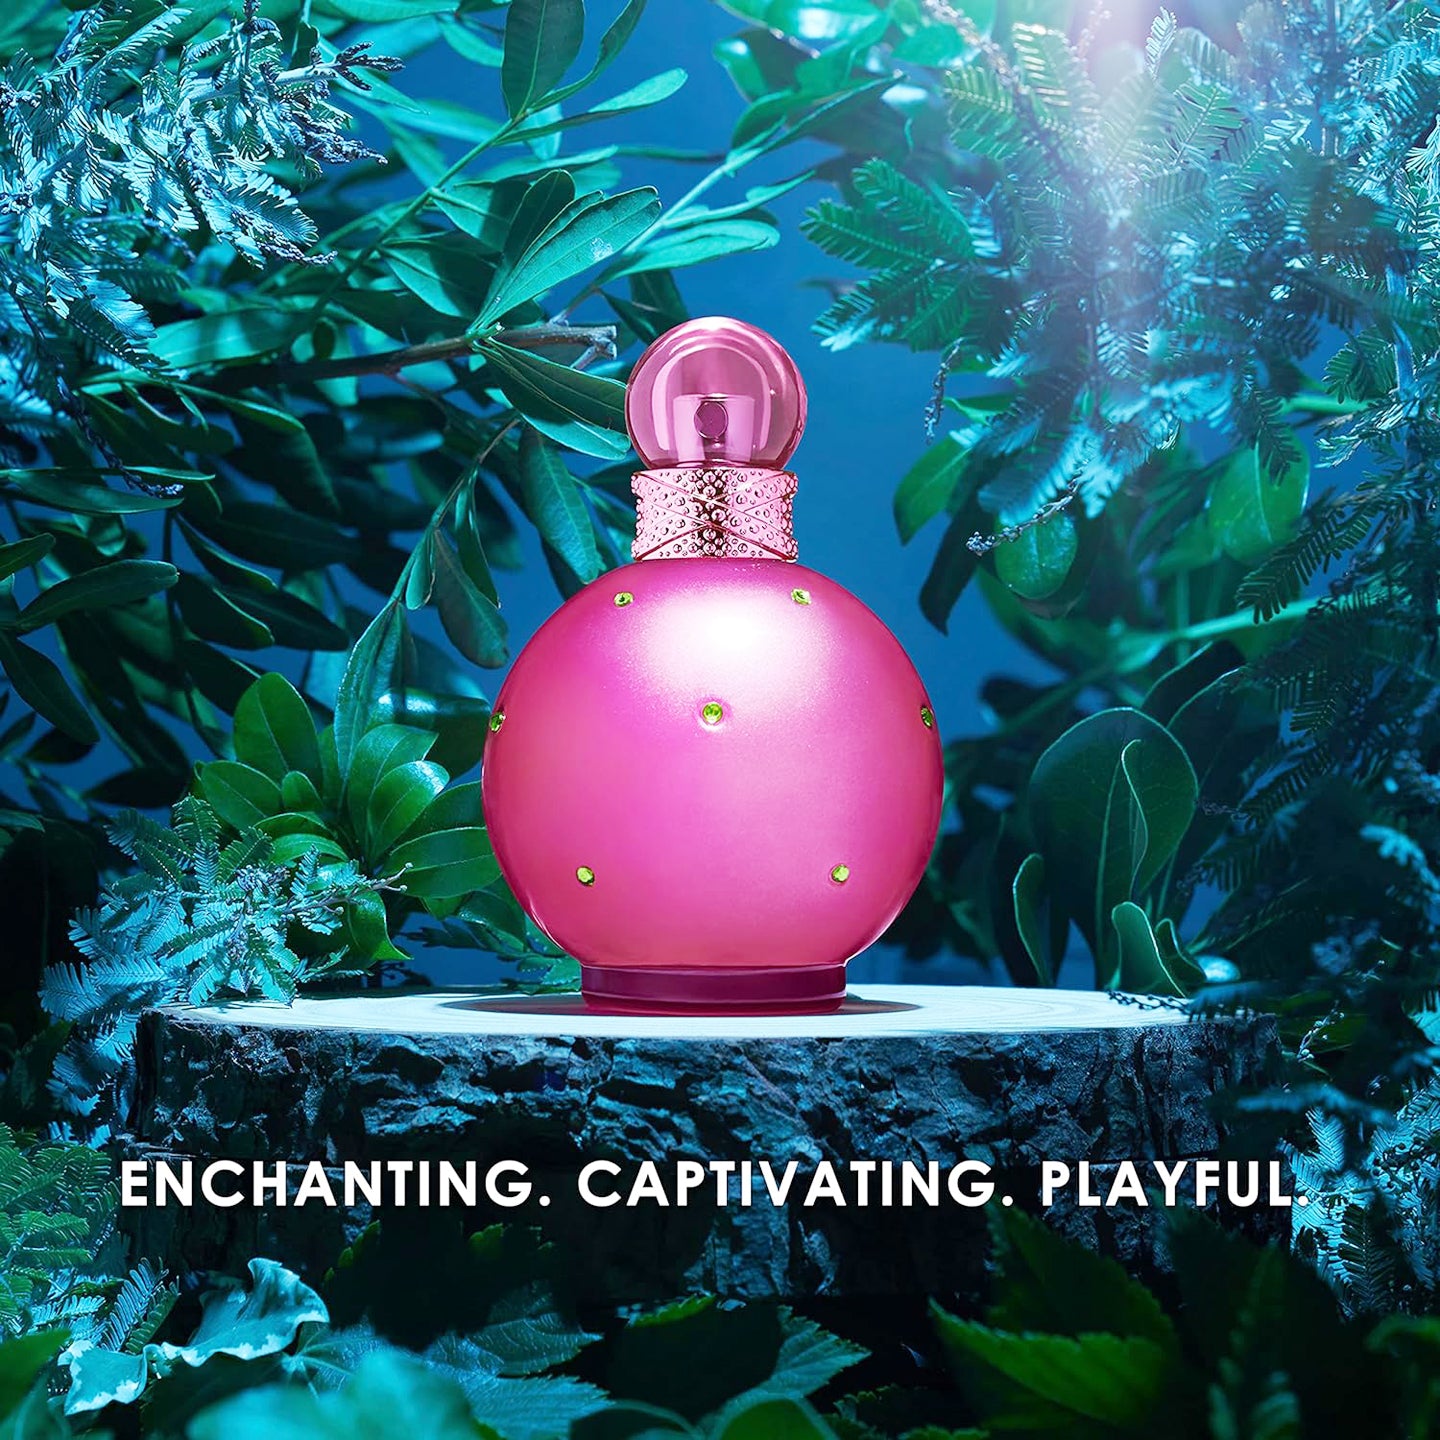 Britney Spears Fantasy Eau de Parfum Spray for Women